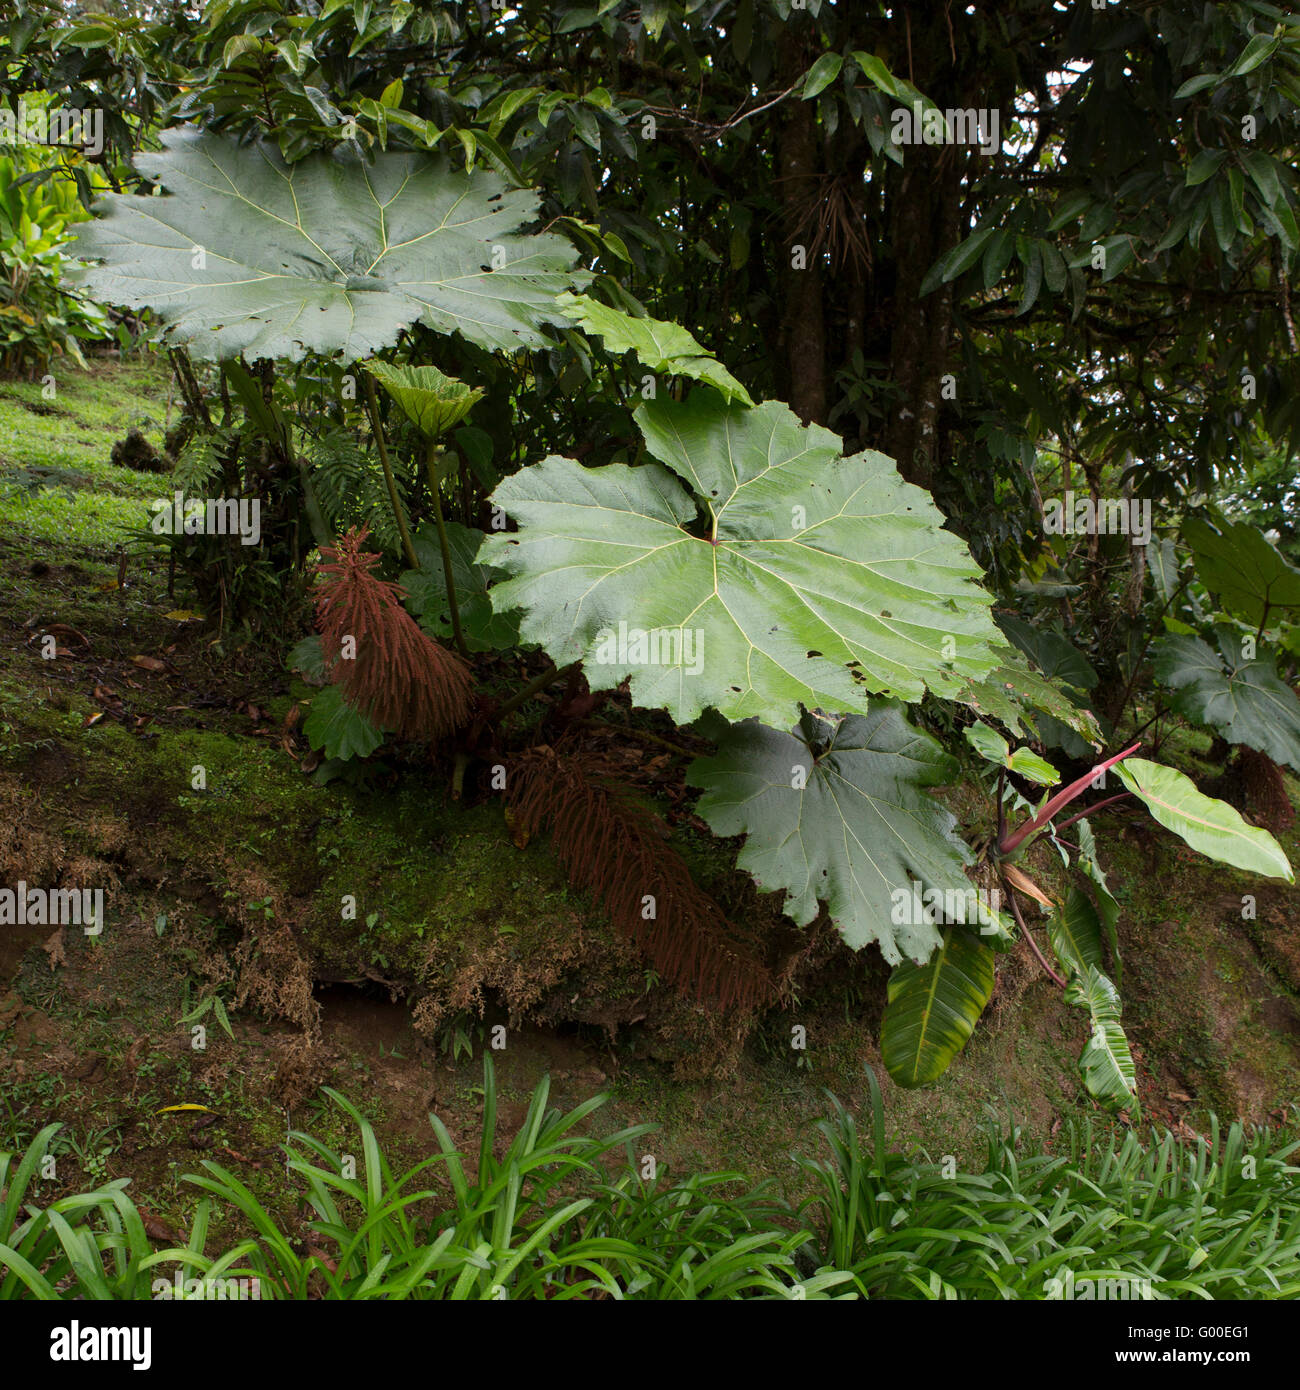 Poor Man's Umbrella plants in Costa Rica. Stock Photo